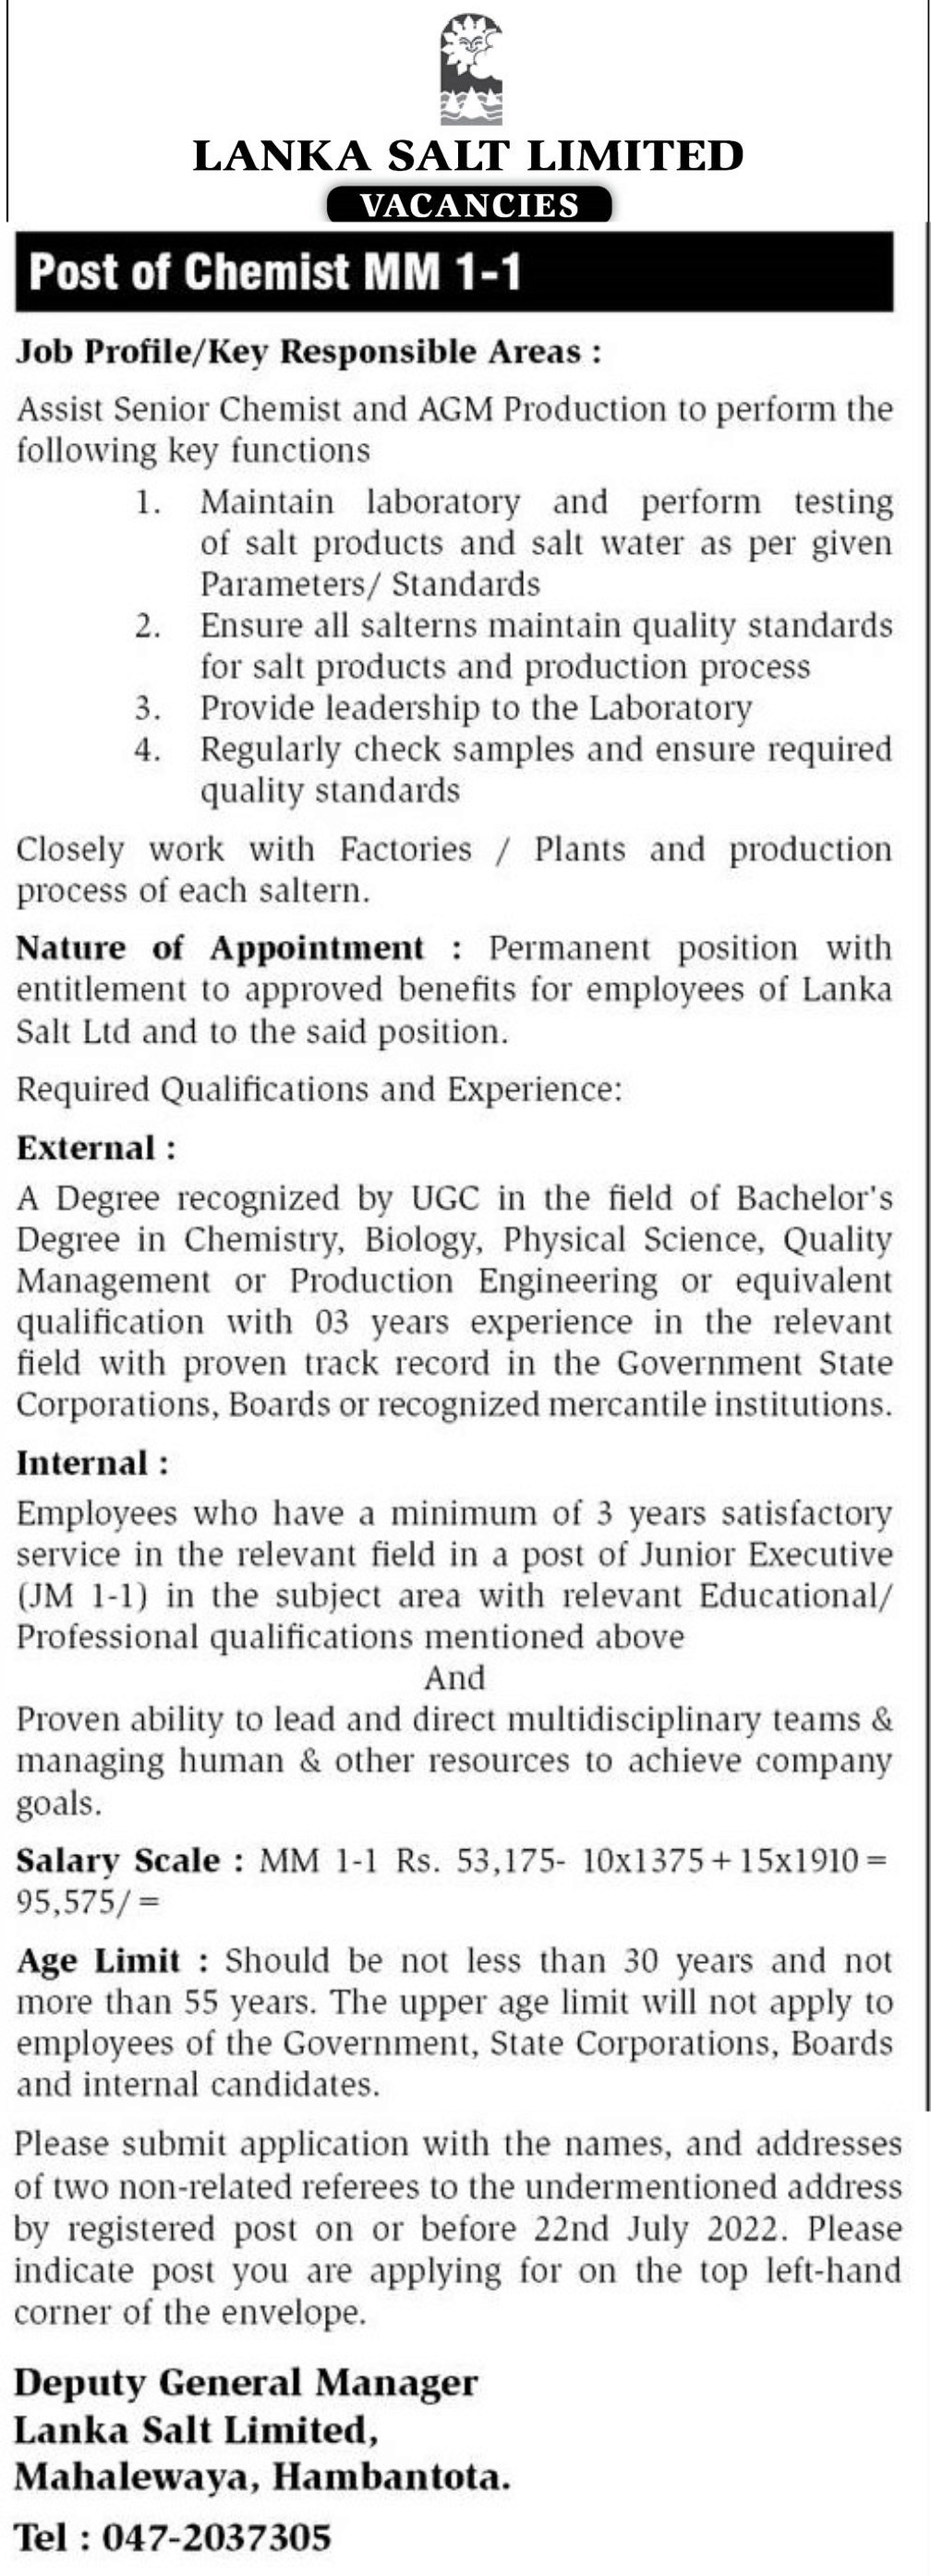 Chemist Job Vacancy - Lanka Salt Ltd Company Jobs Vacancies